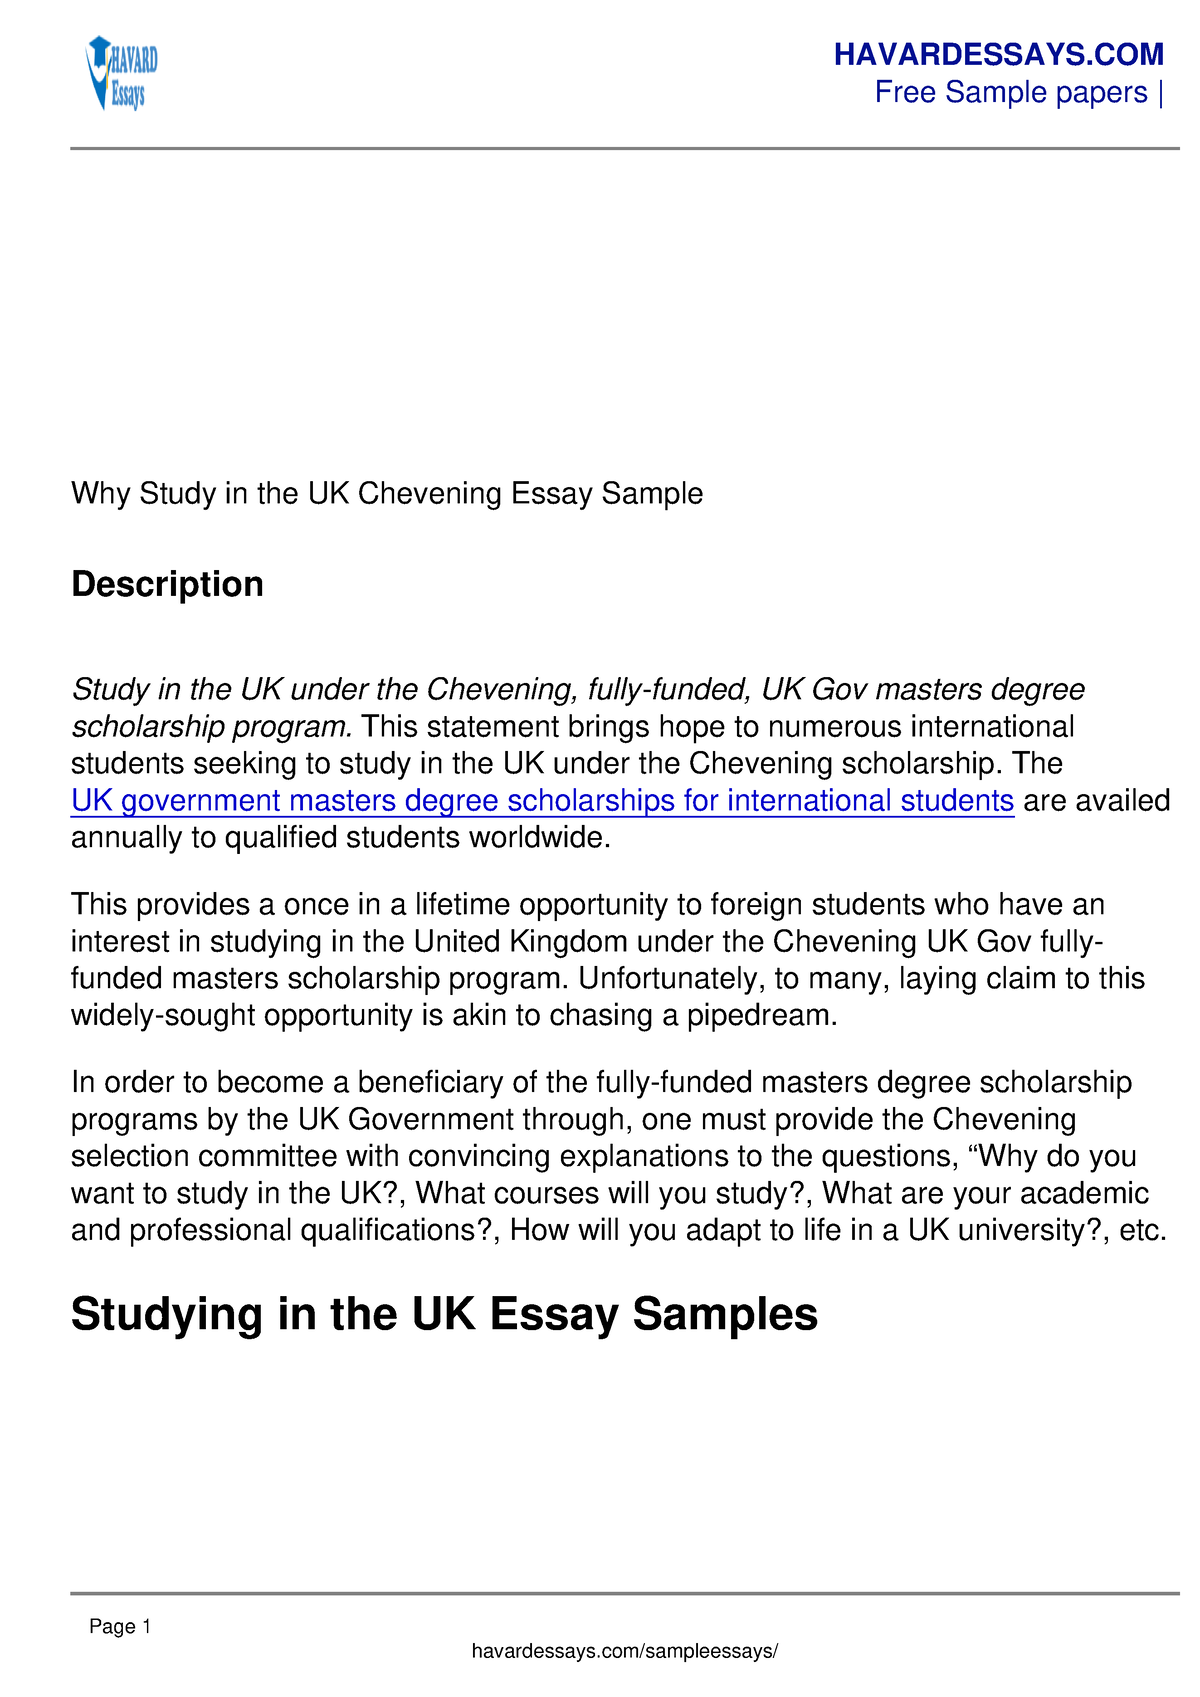 examples of chevening essays